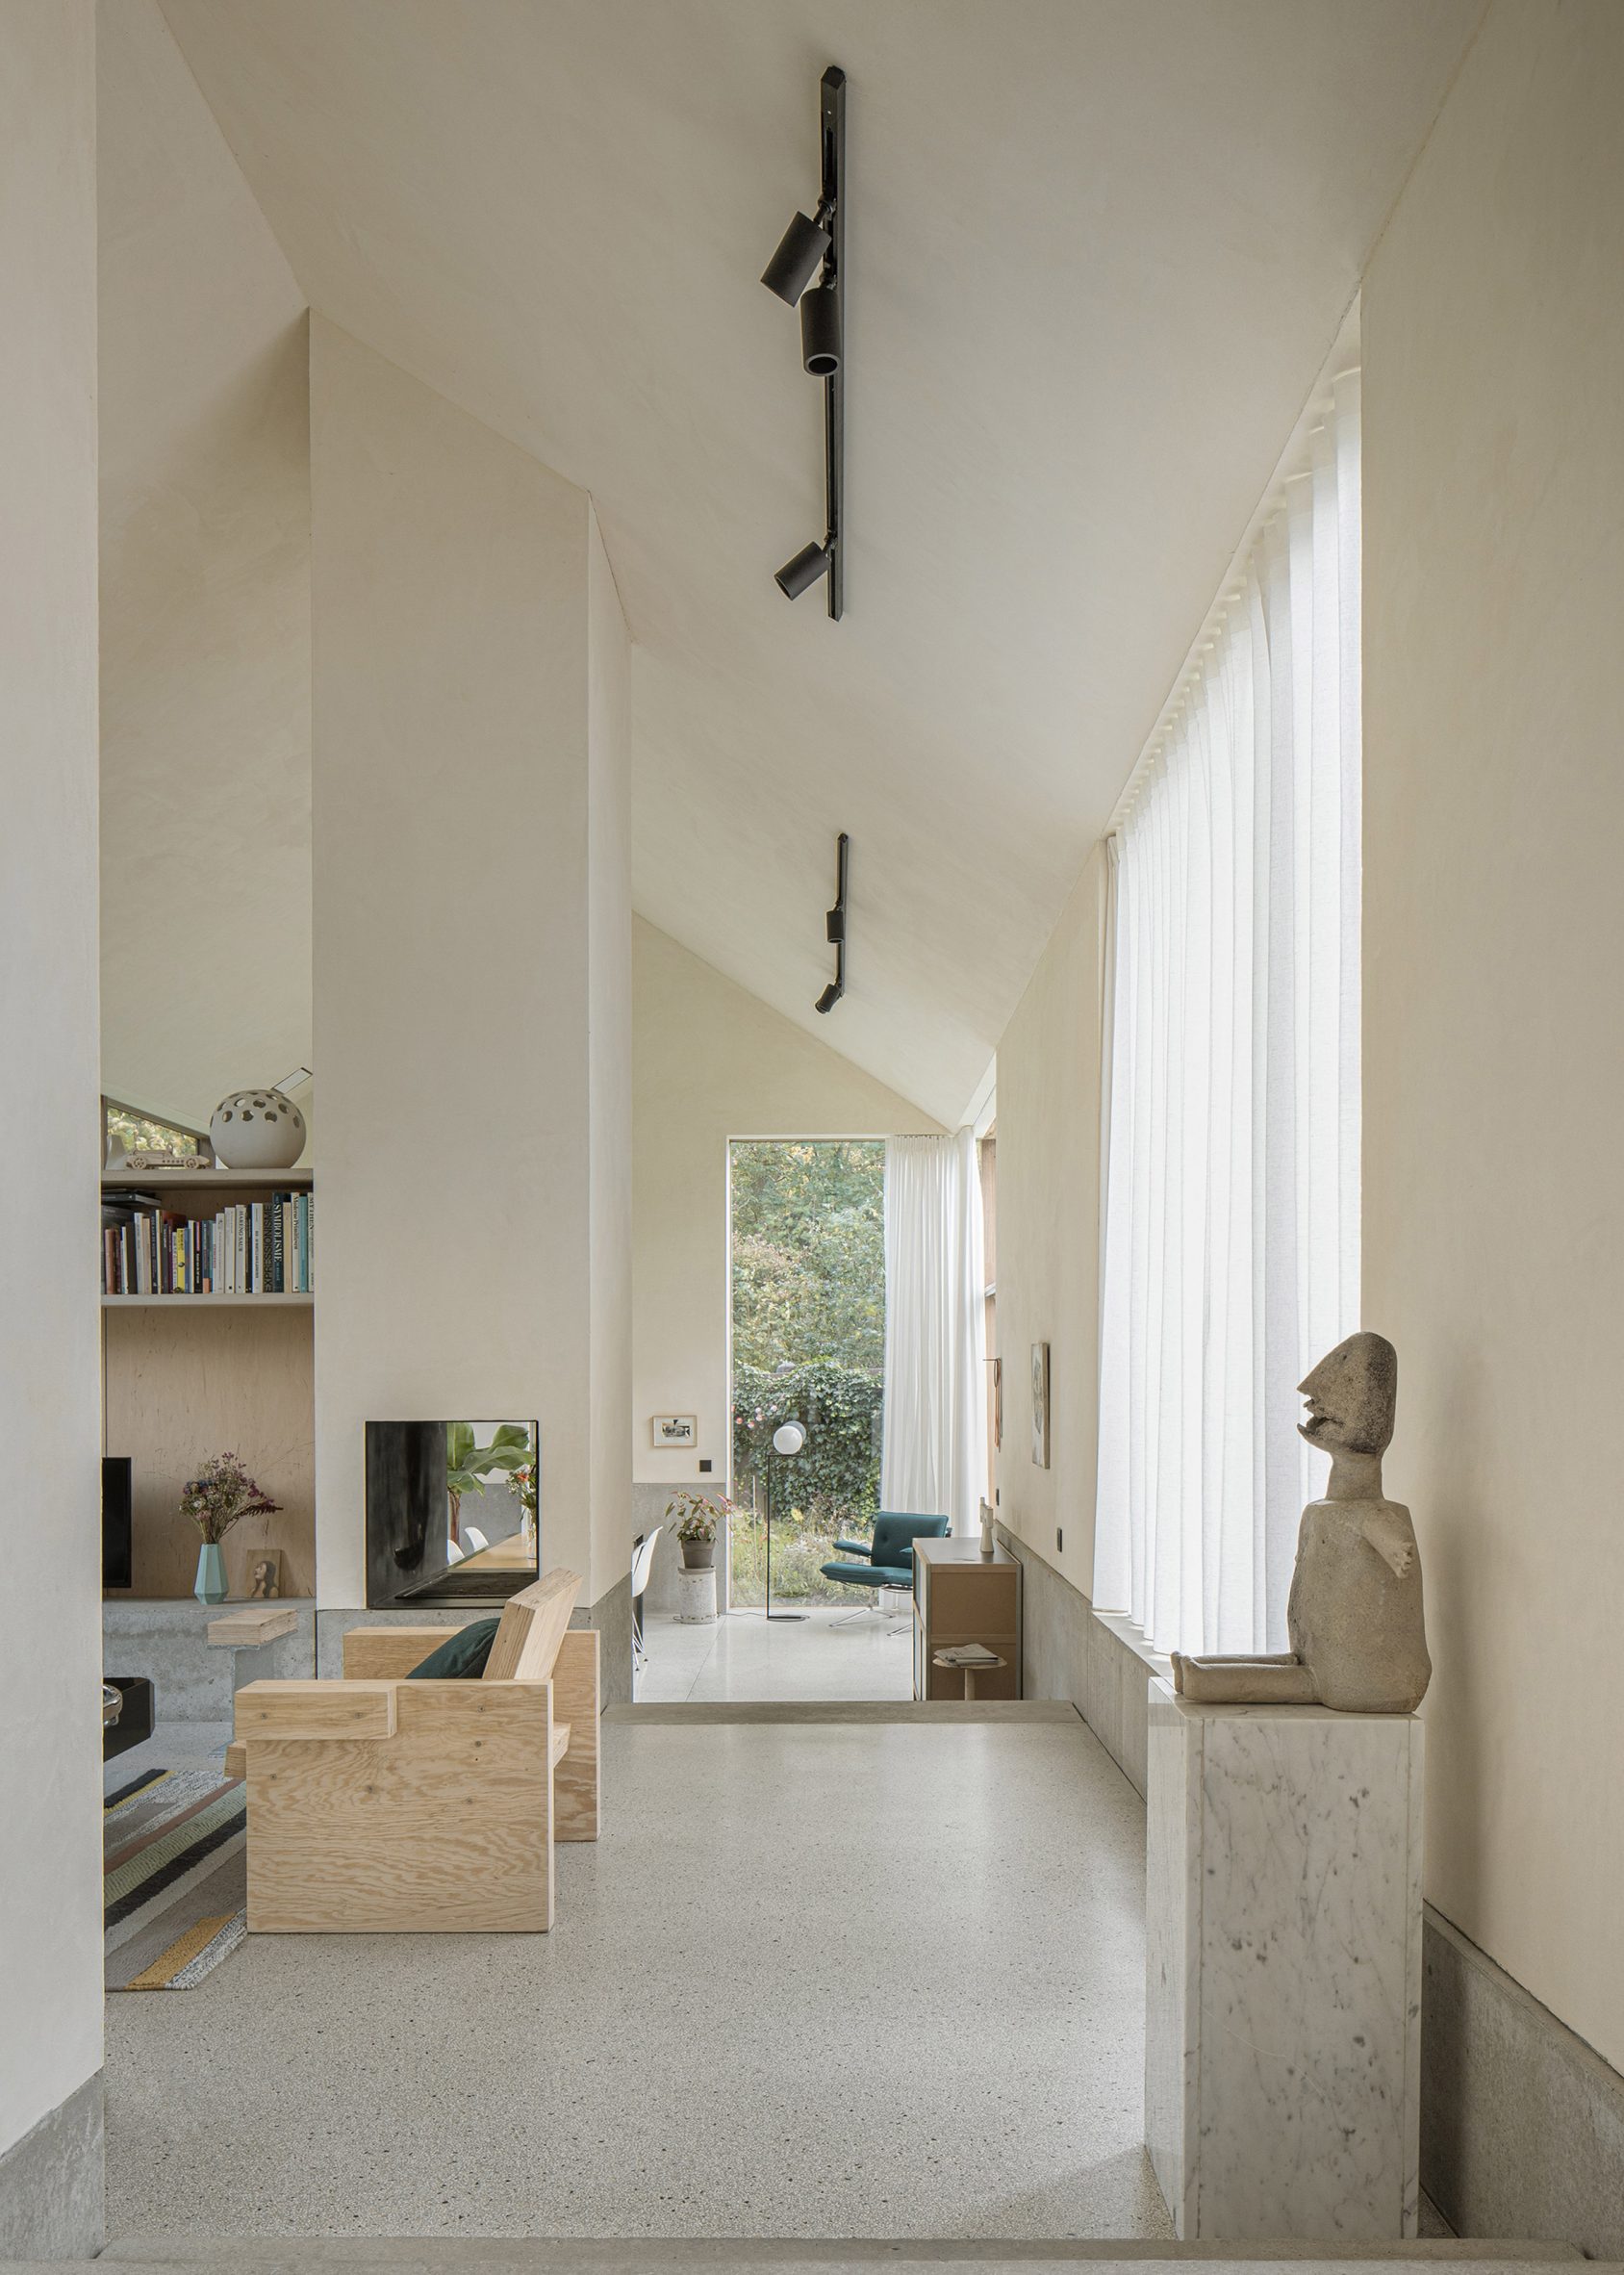 Interior with terrazzo floor